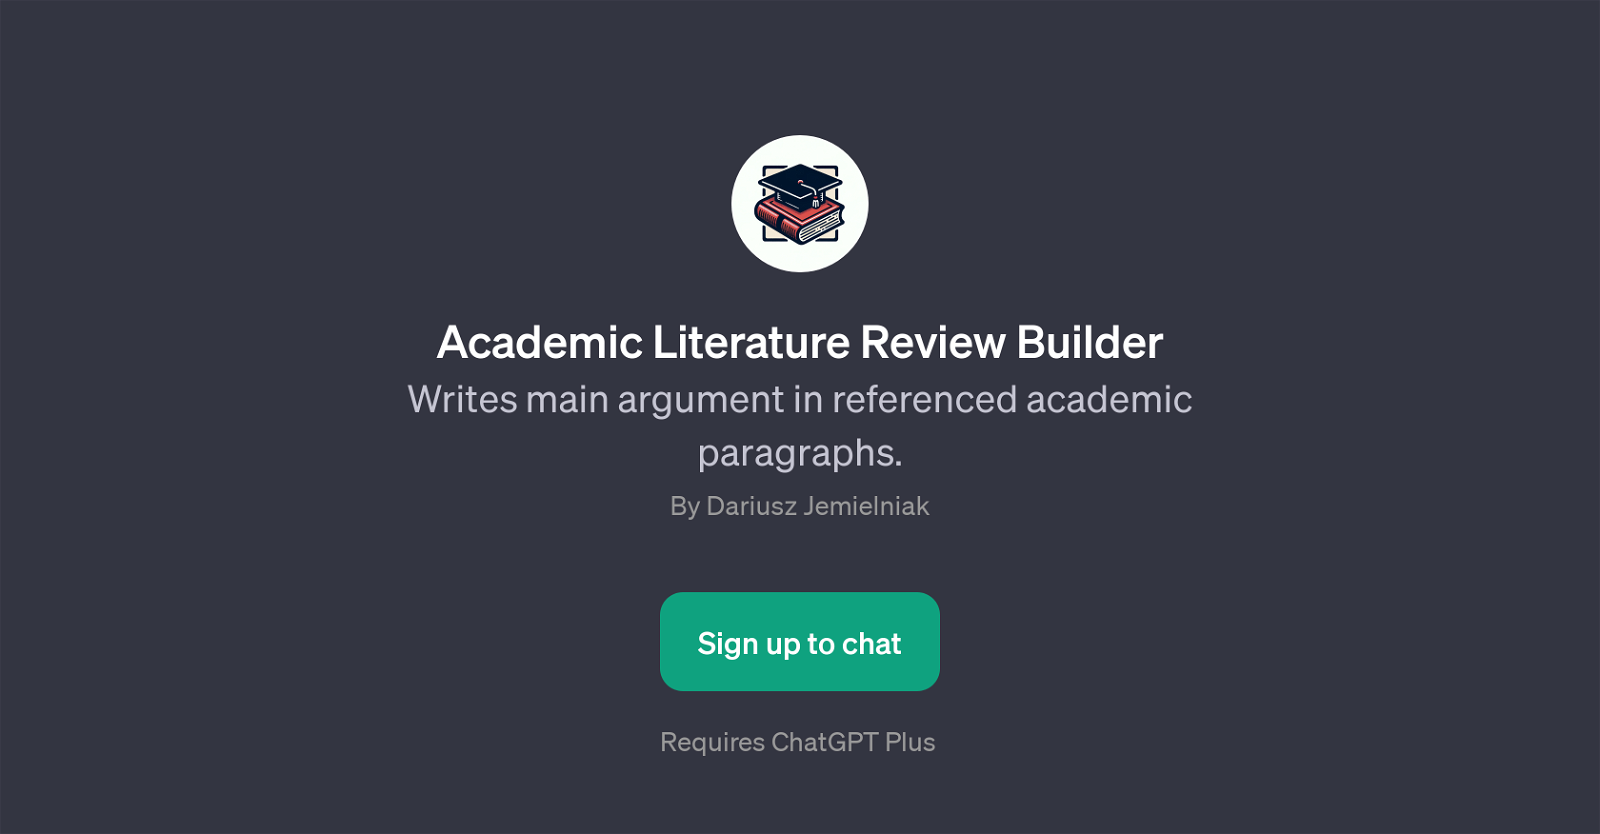 Academic Literature Review Builder website